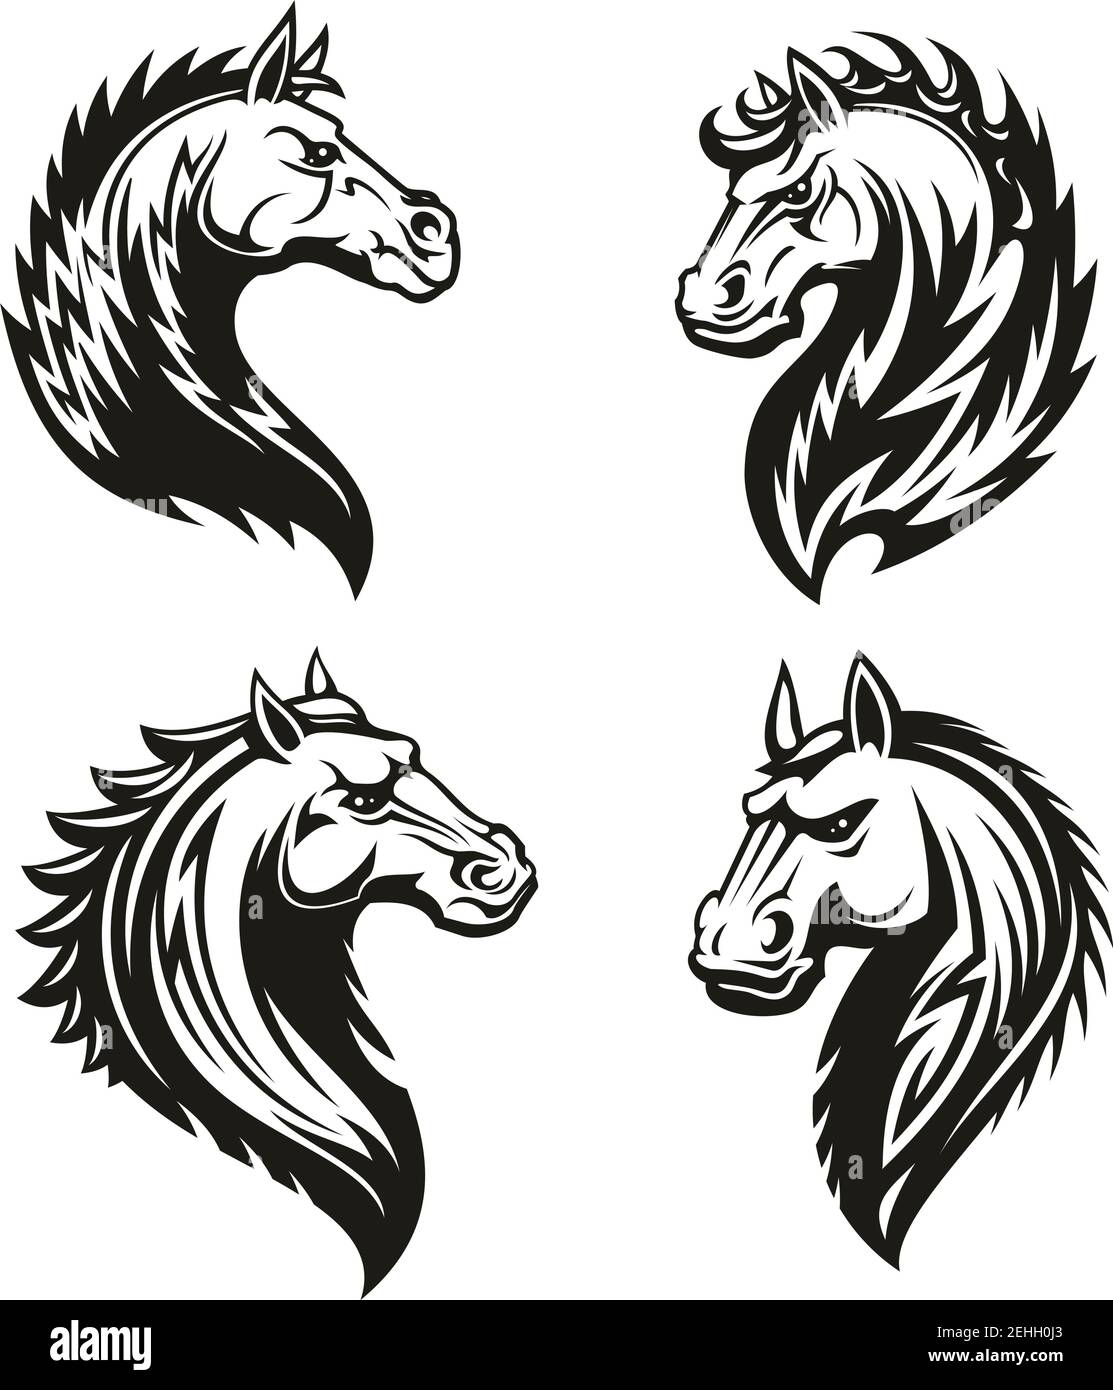 horse tattoo designs - Google Search | Horse tattoo, Horse tattoo design,  Realism tattoo